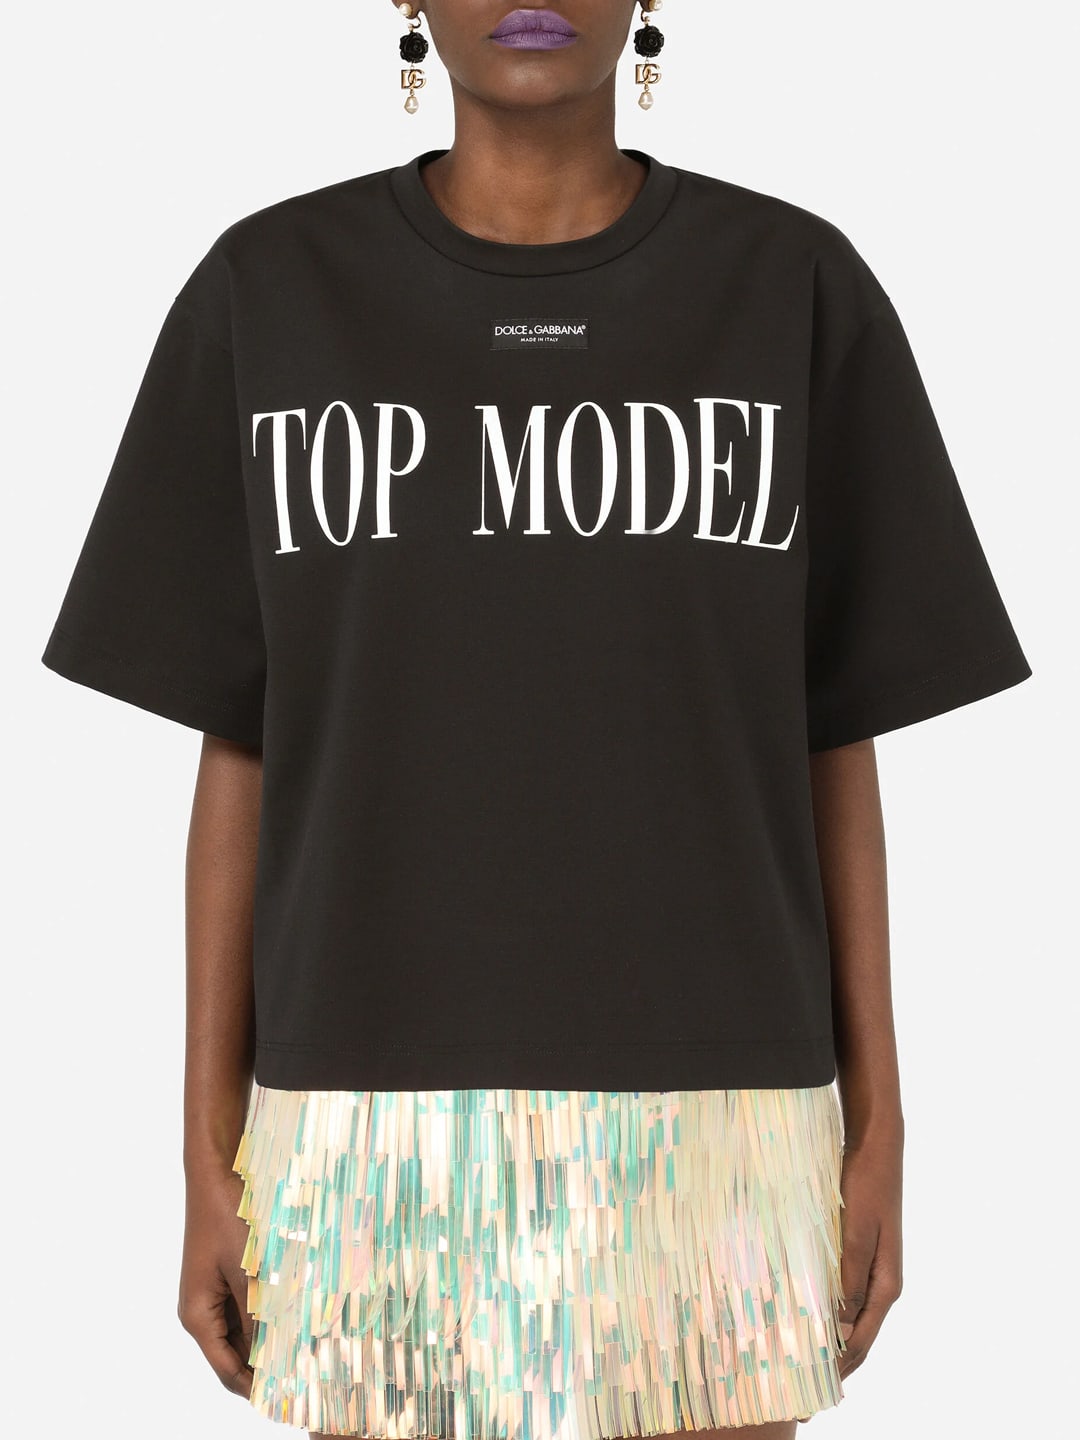 Dolce & Gabbana Top Model Black T-shirt